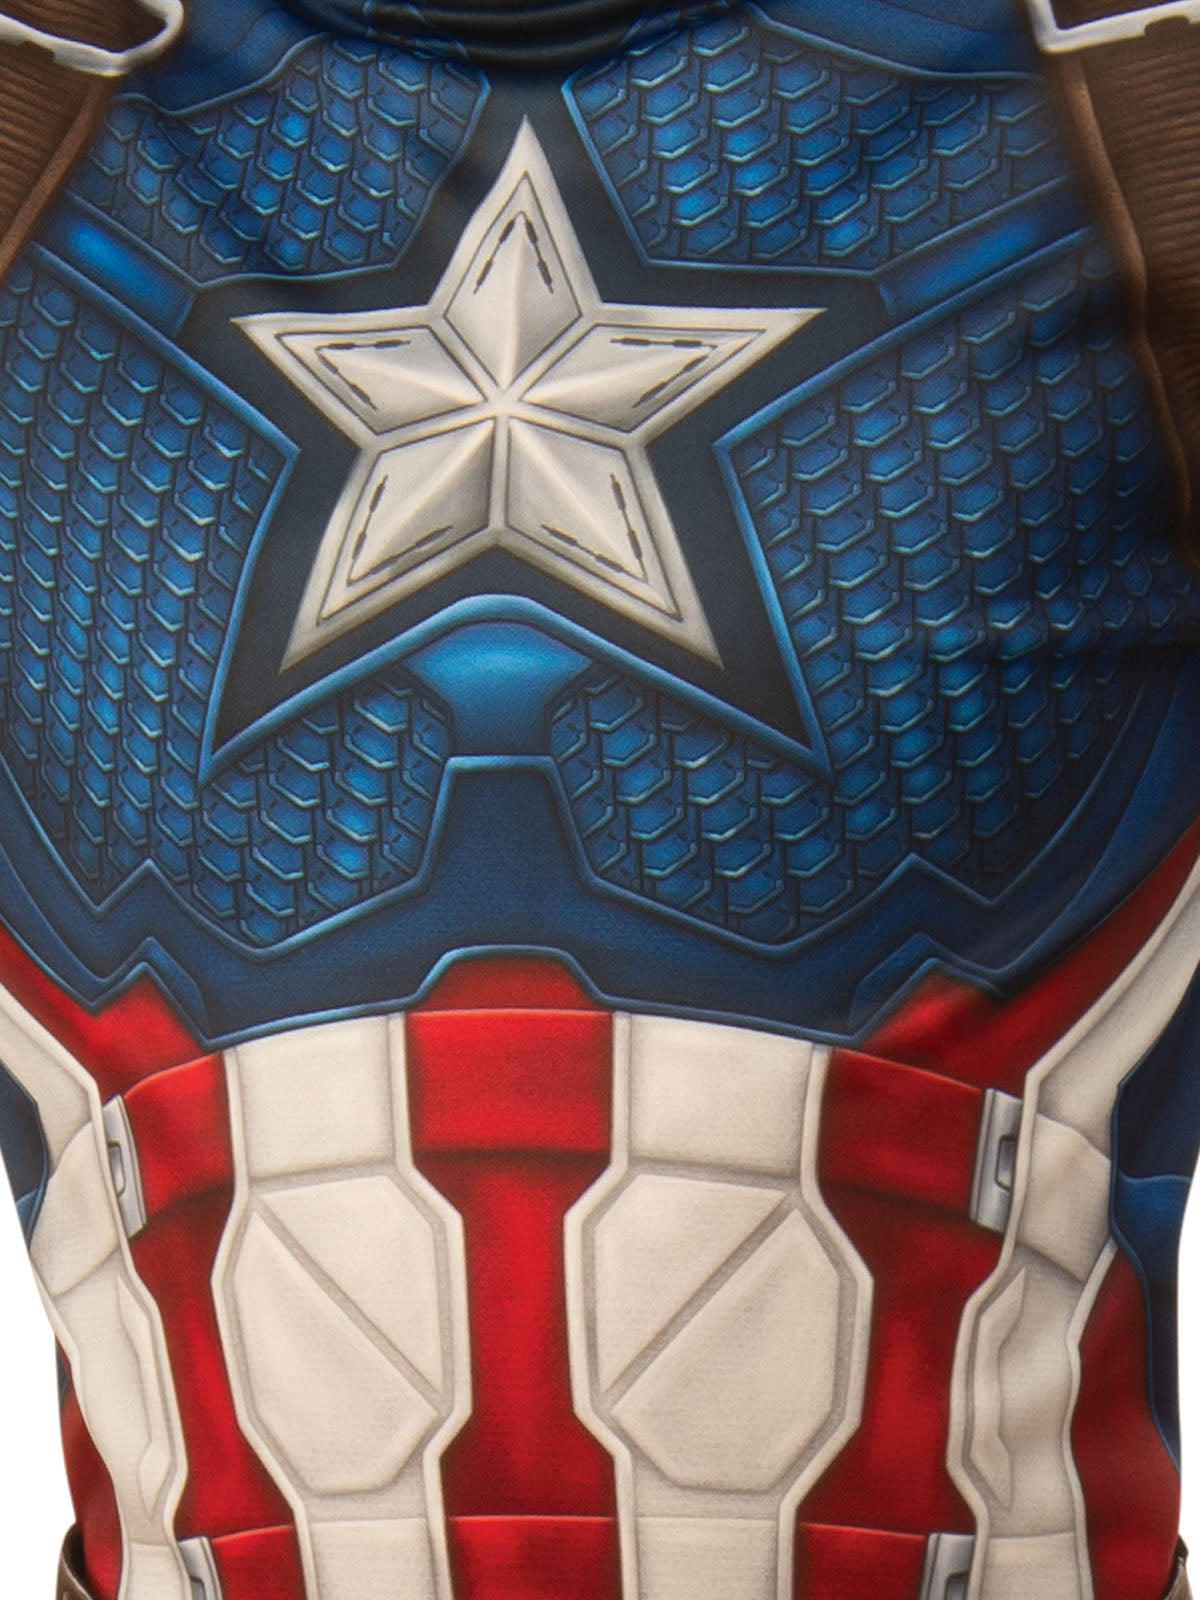 Captain America Boys Child Costume - Licensed